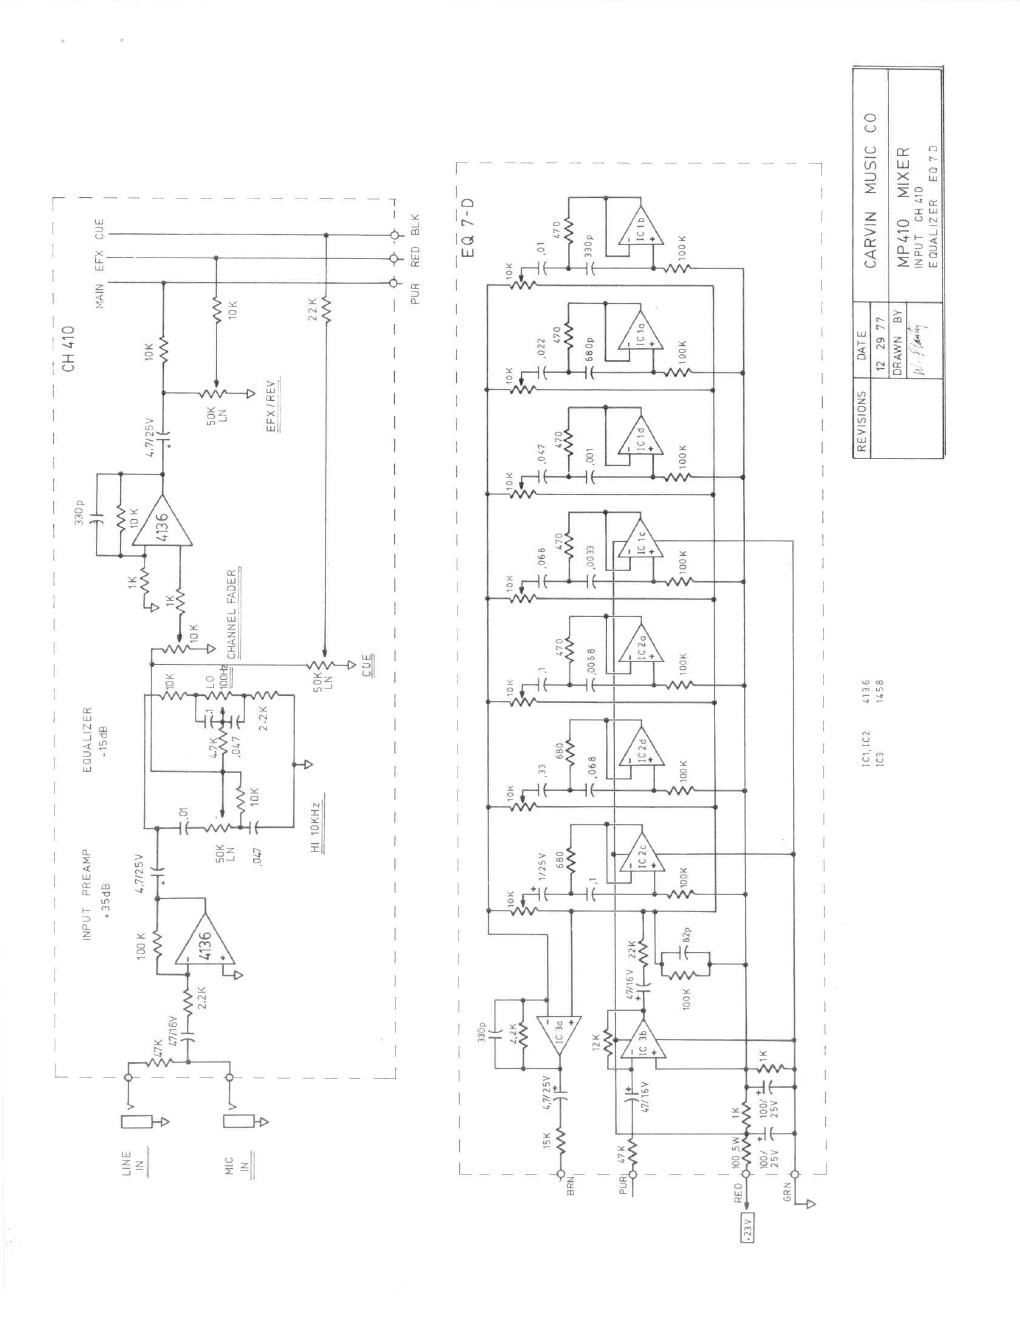 carvin mp 410 mixer schematic